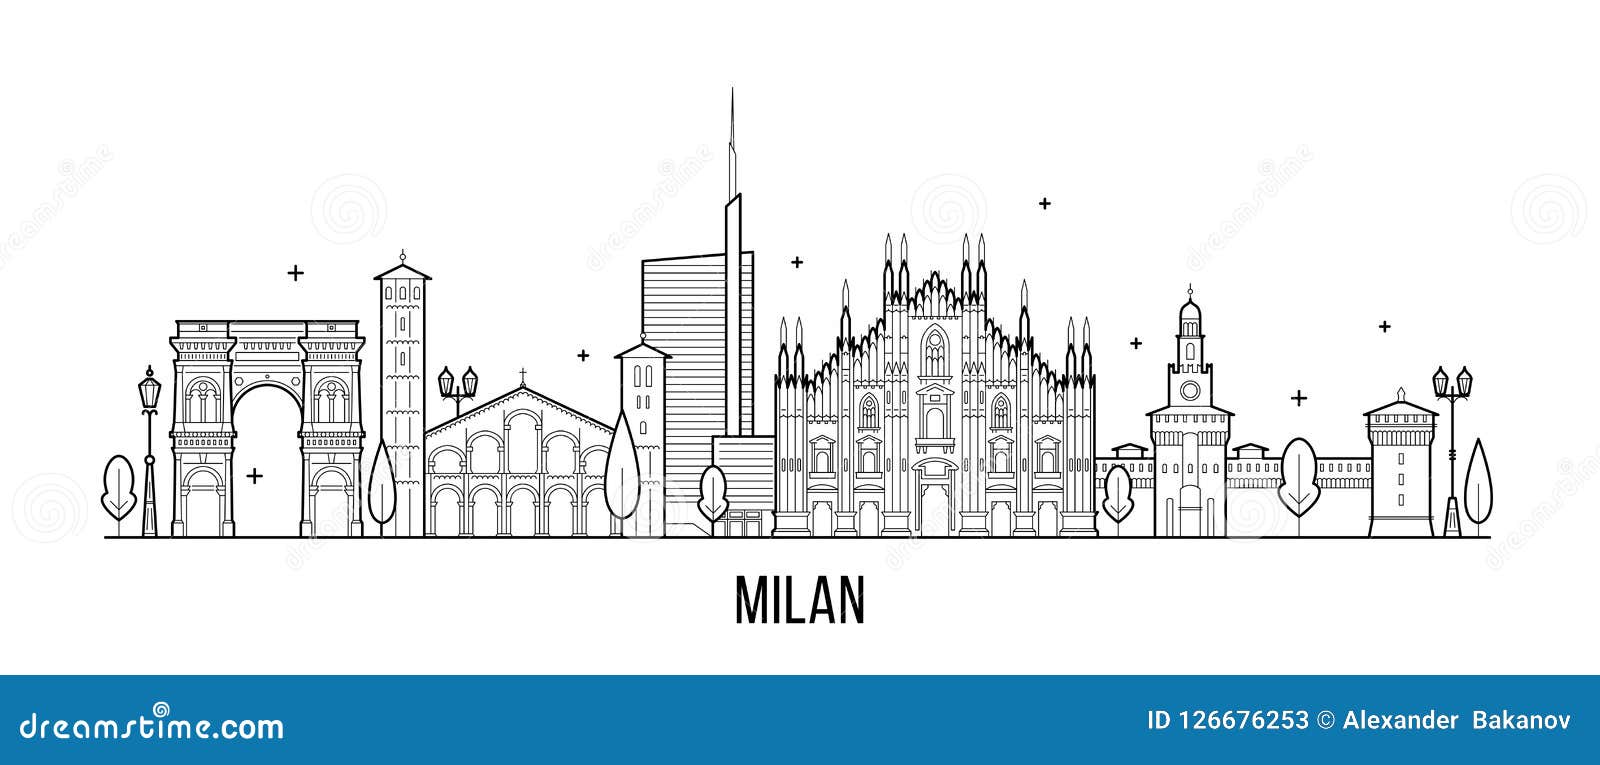 milan skyline italy city buildings  line art